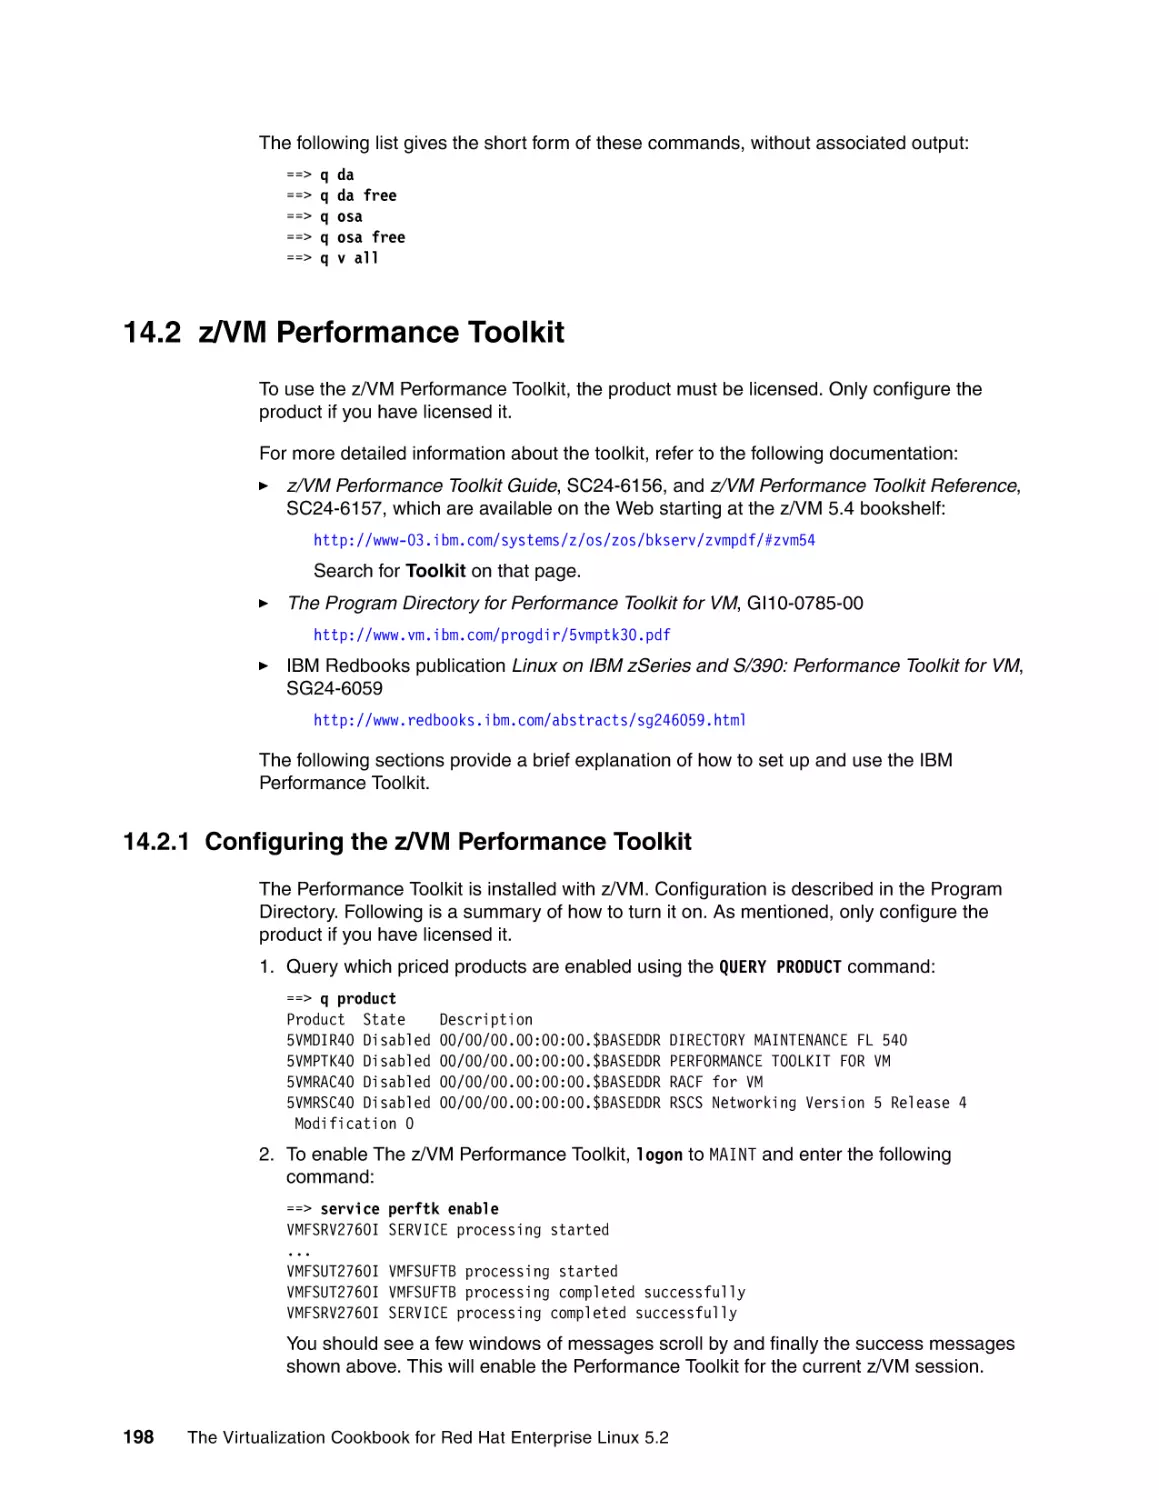 14.2 z/VM Performance Toolkit
14.2.1 Configuring the z/VM Performance Toolkit